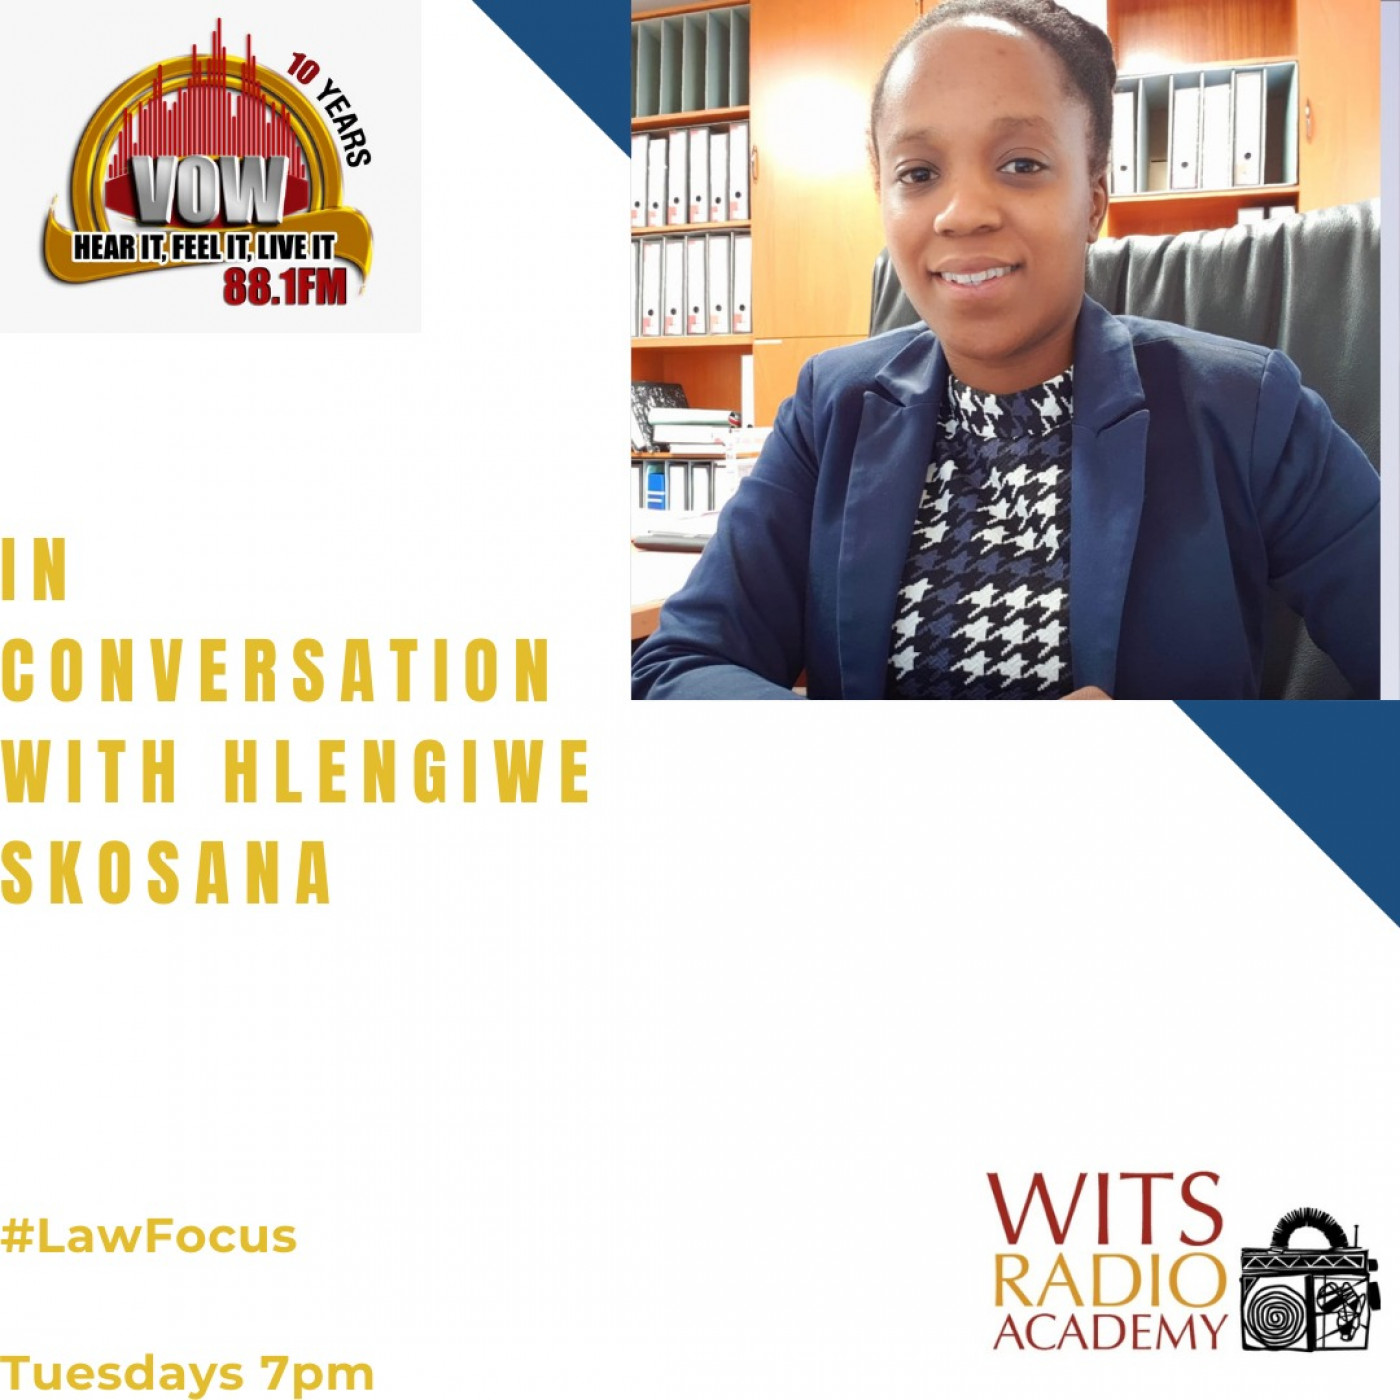 Law Focus - Profile: Hlengiwe Skosana